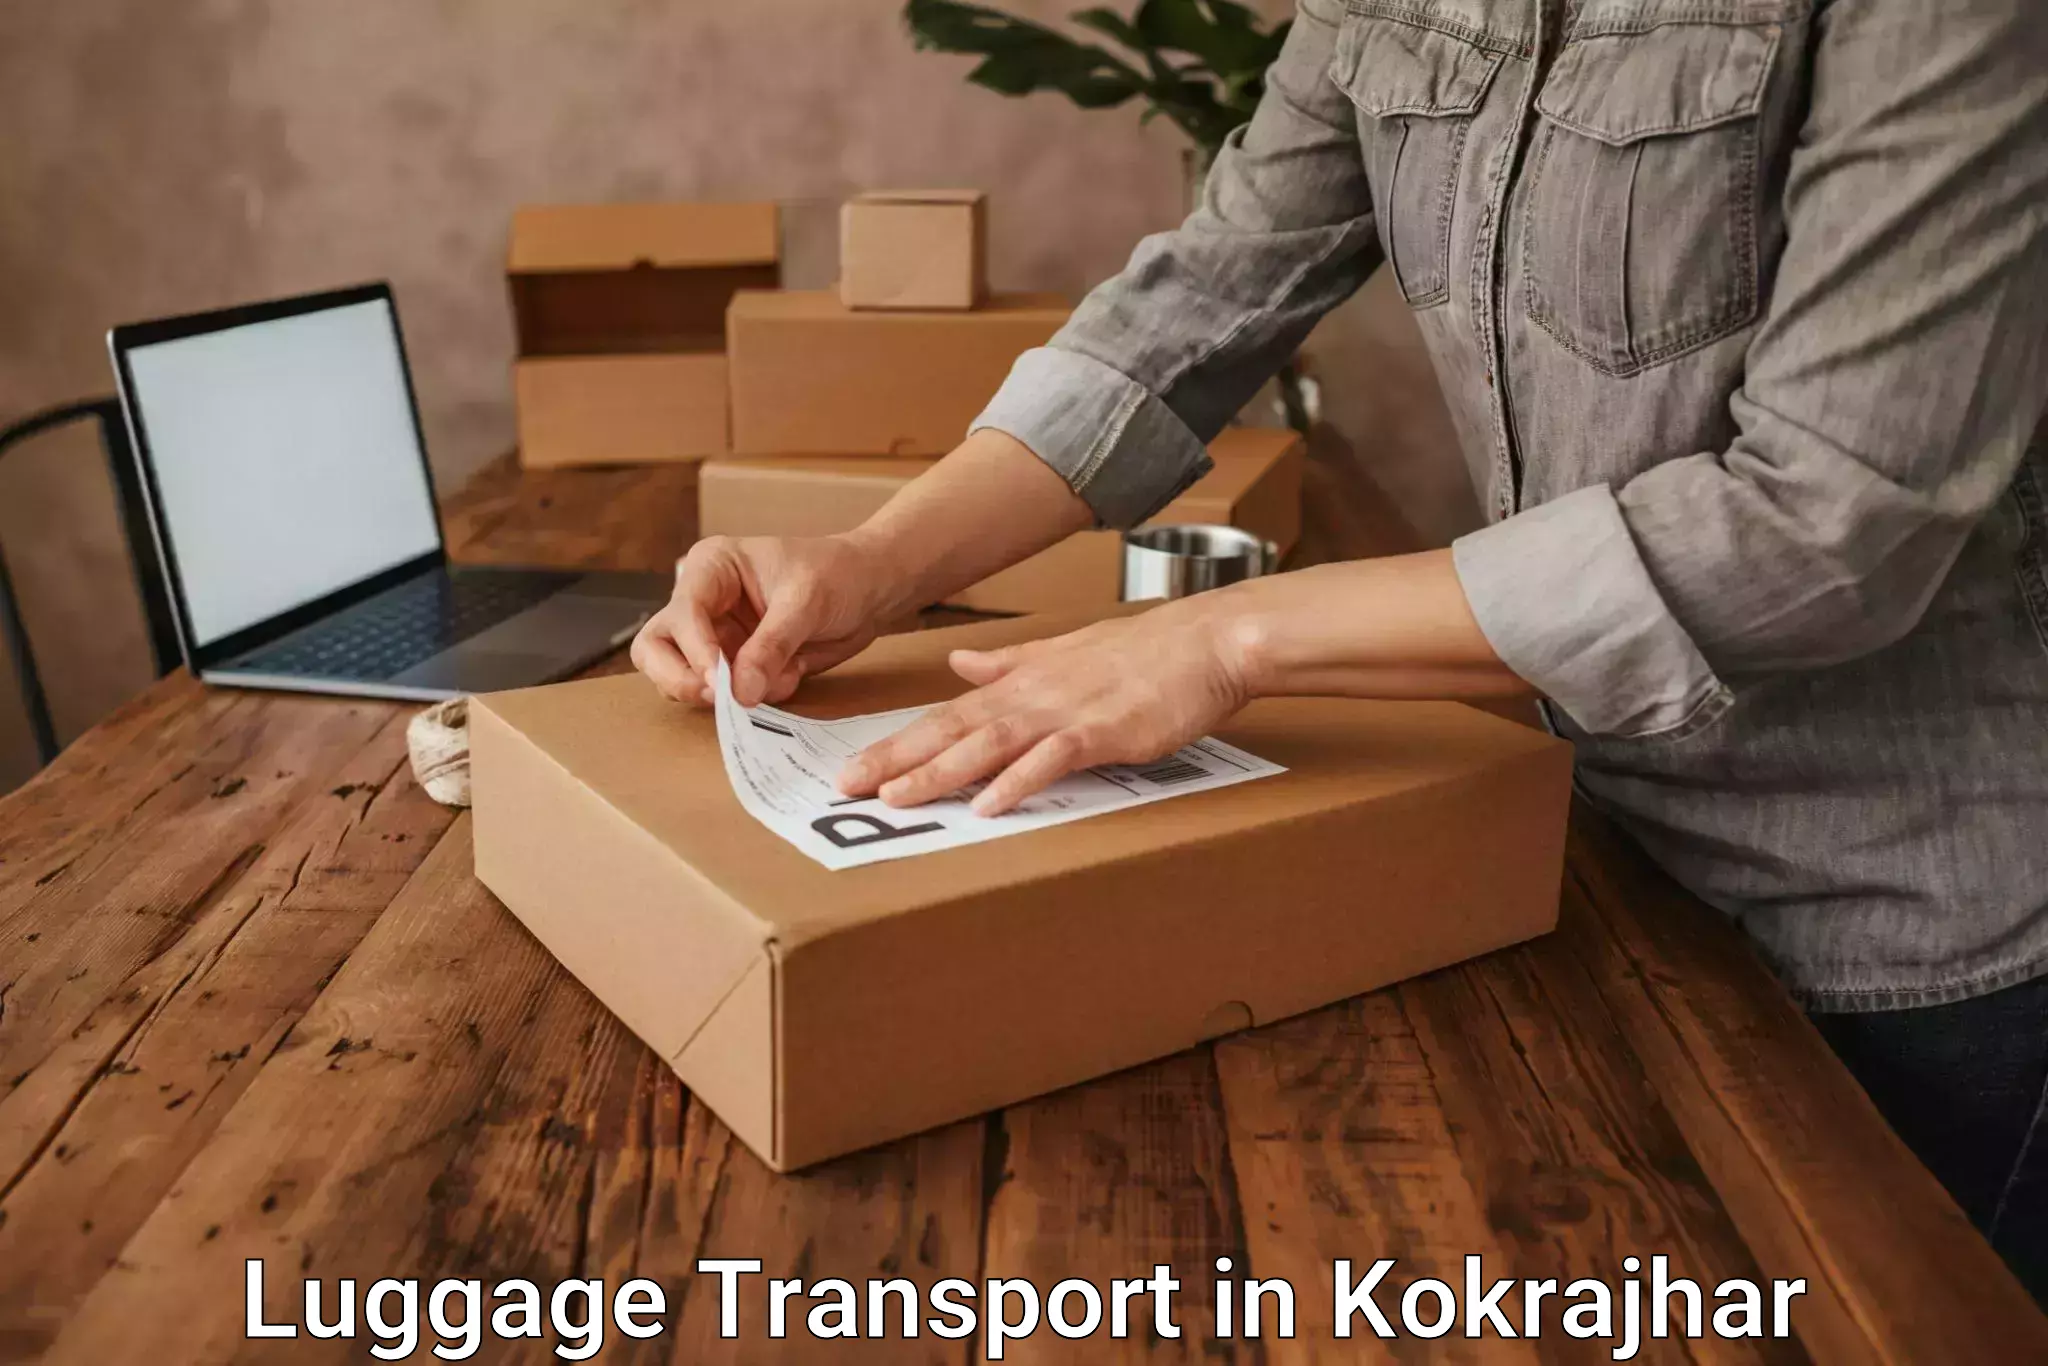 Luggage shipment specialists in Kokrajhar